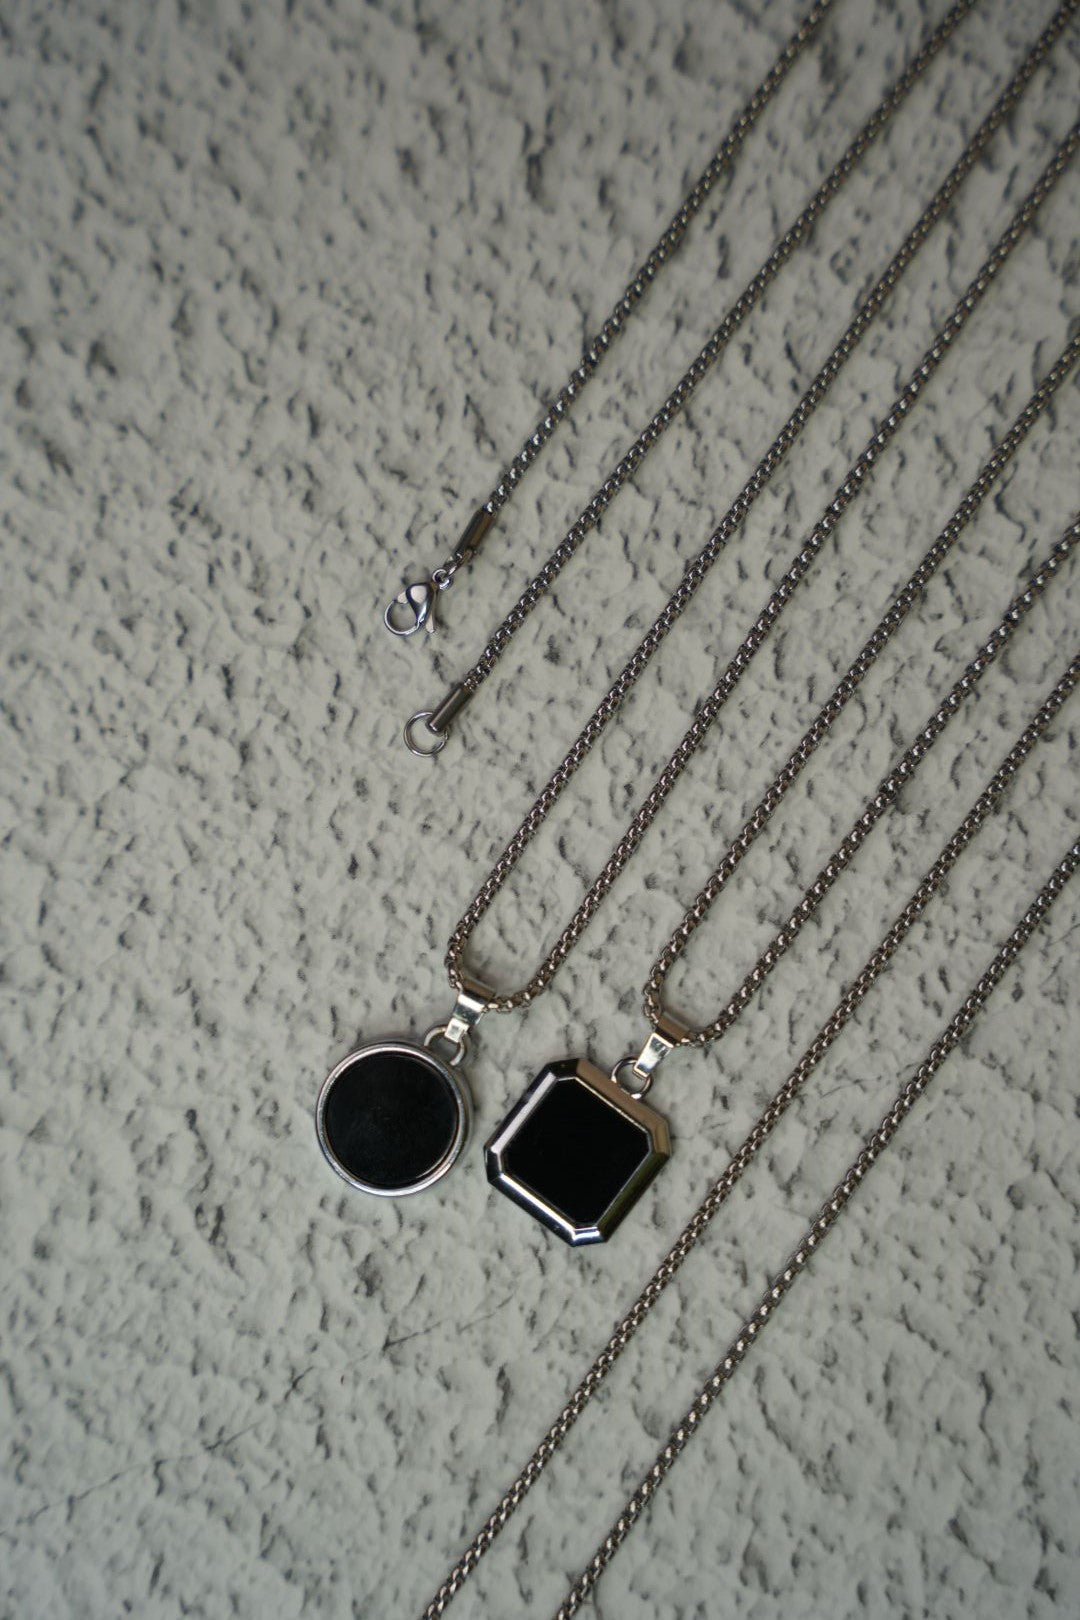 Classy Black Pendant Necklace Combo